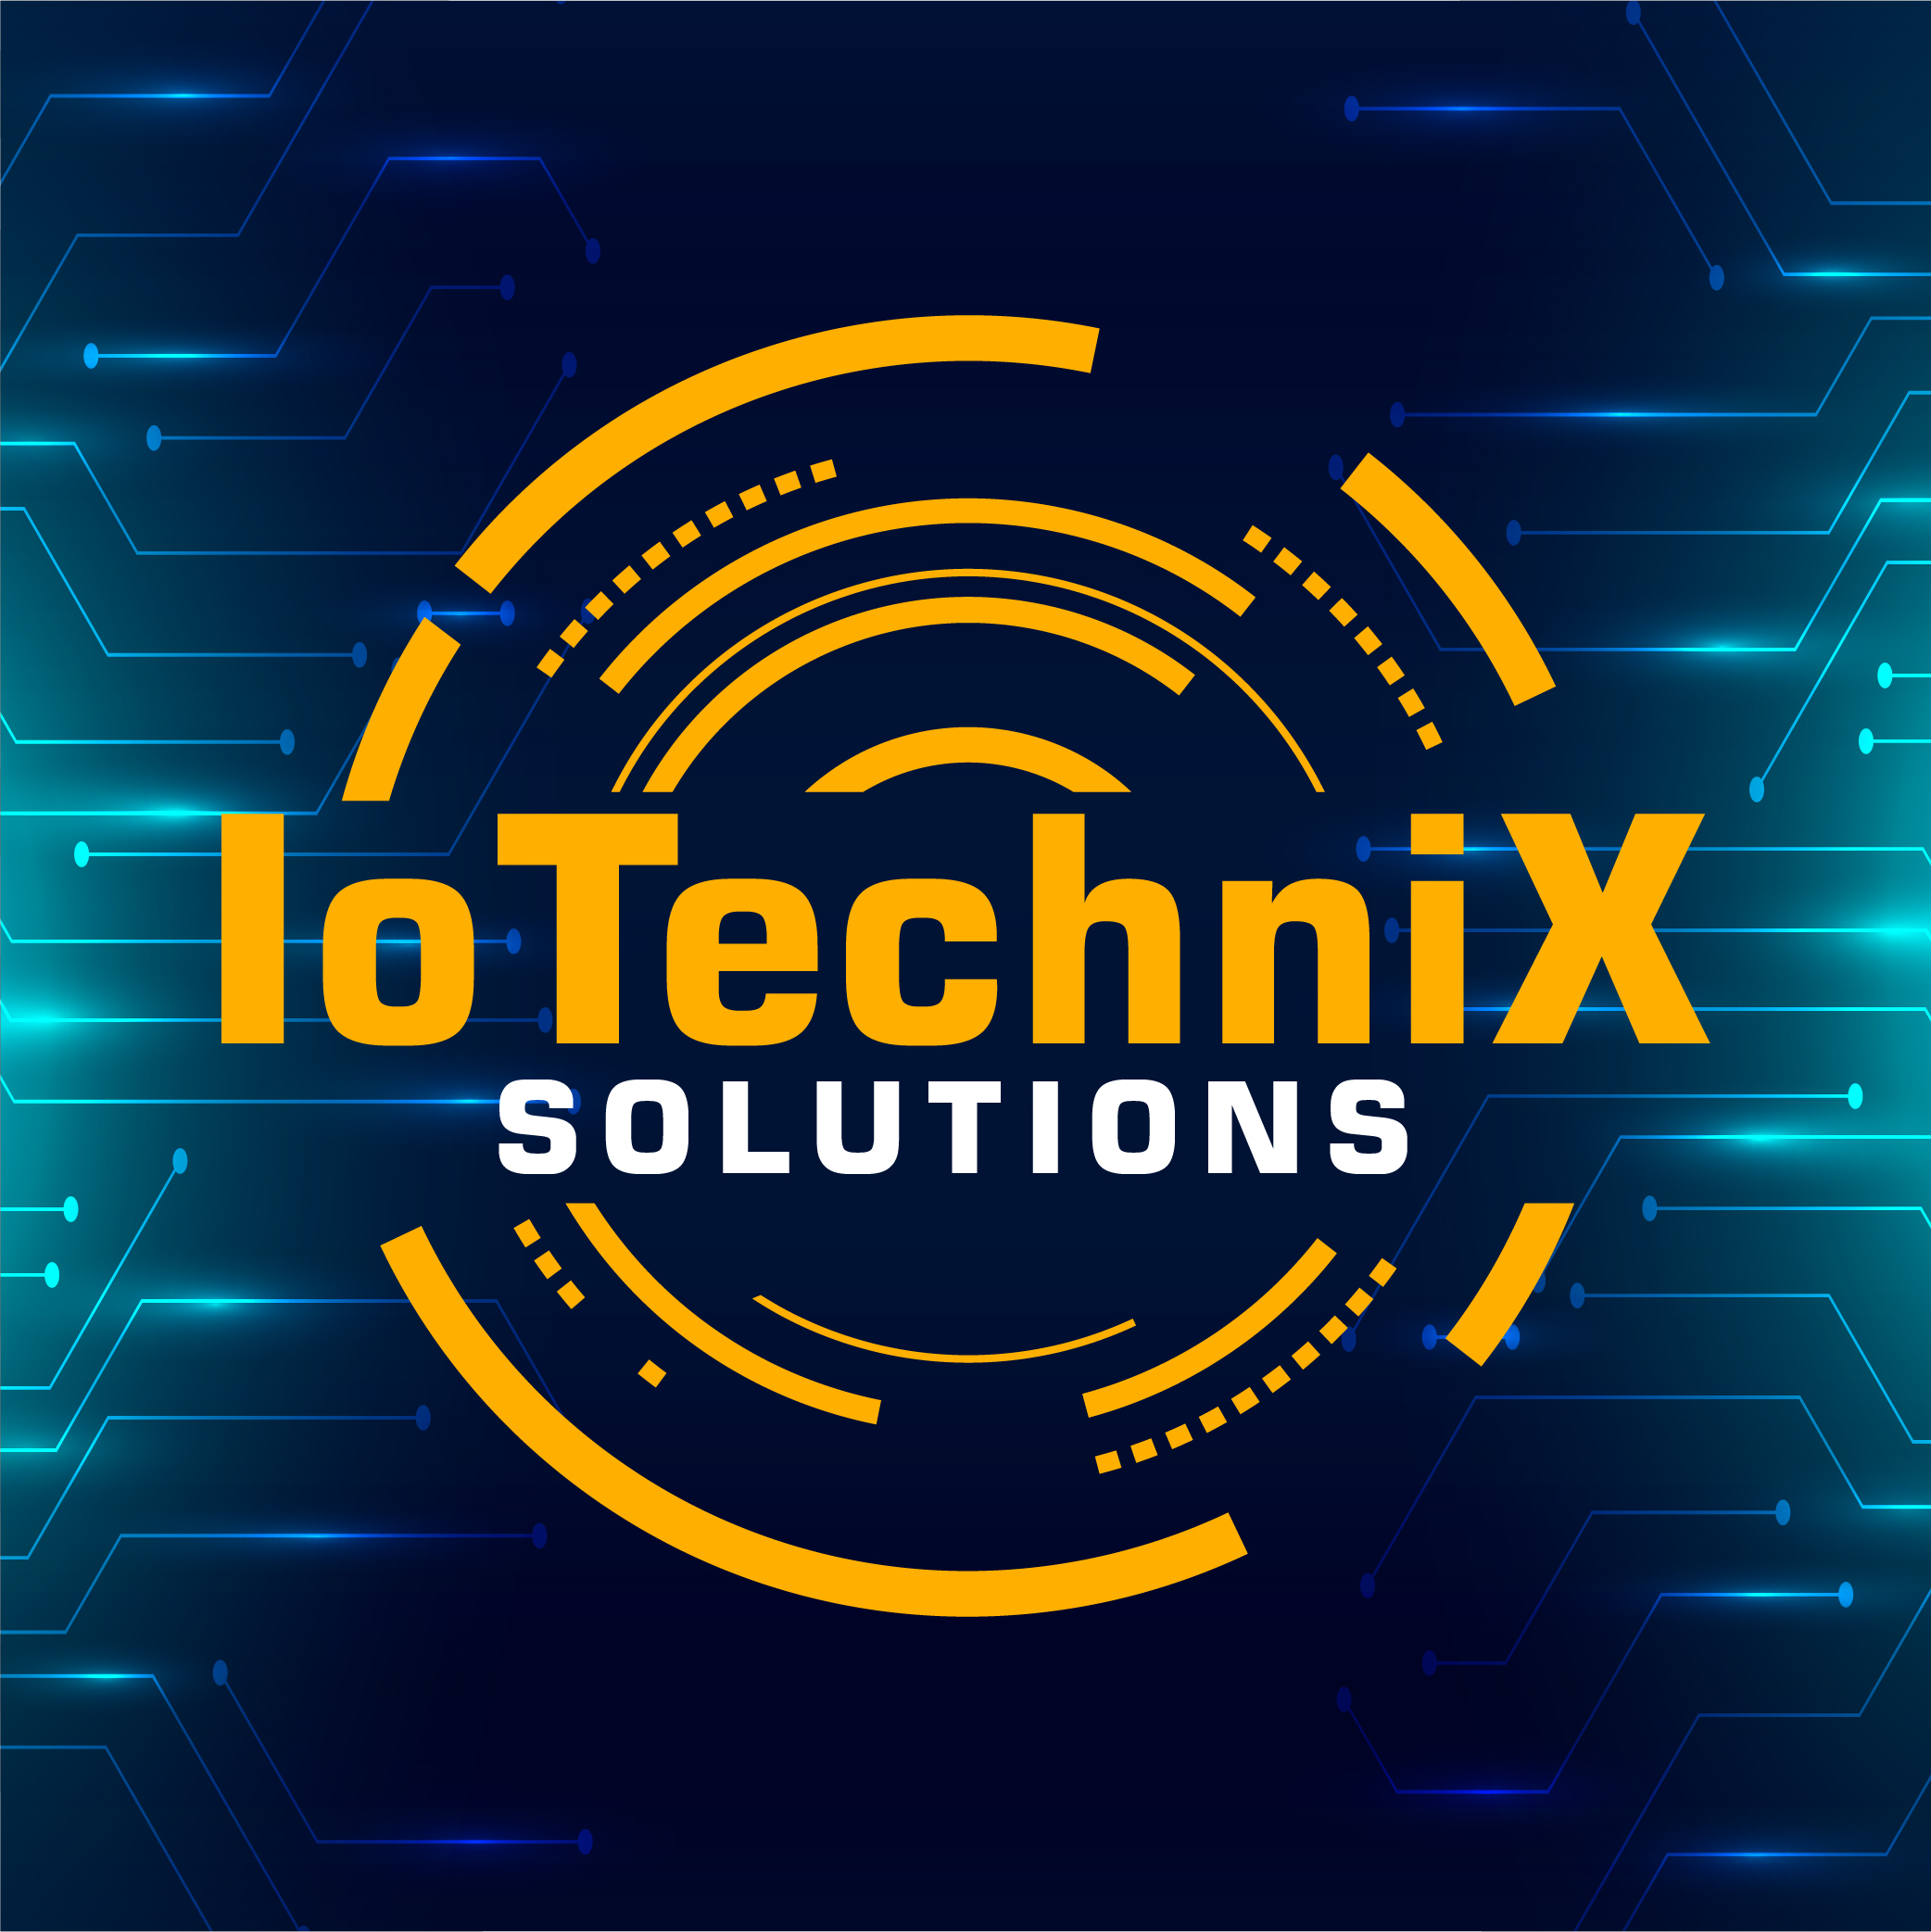 Iotechnix solutions 01